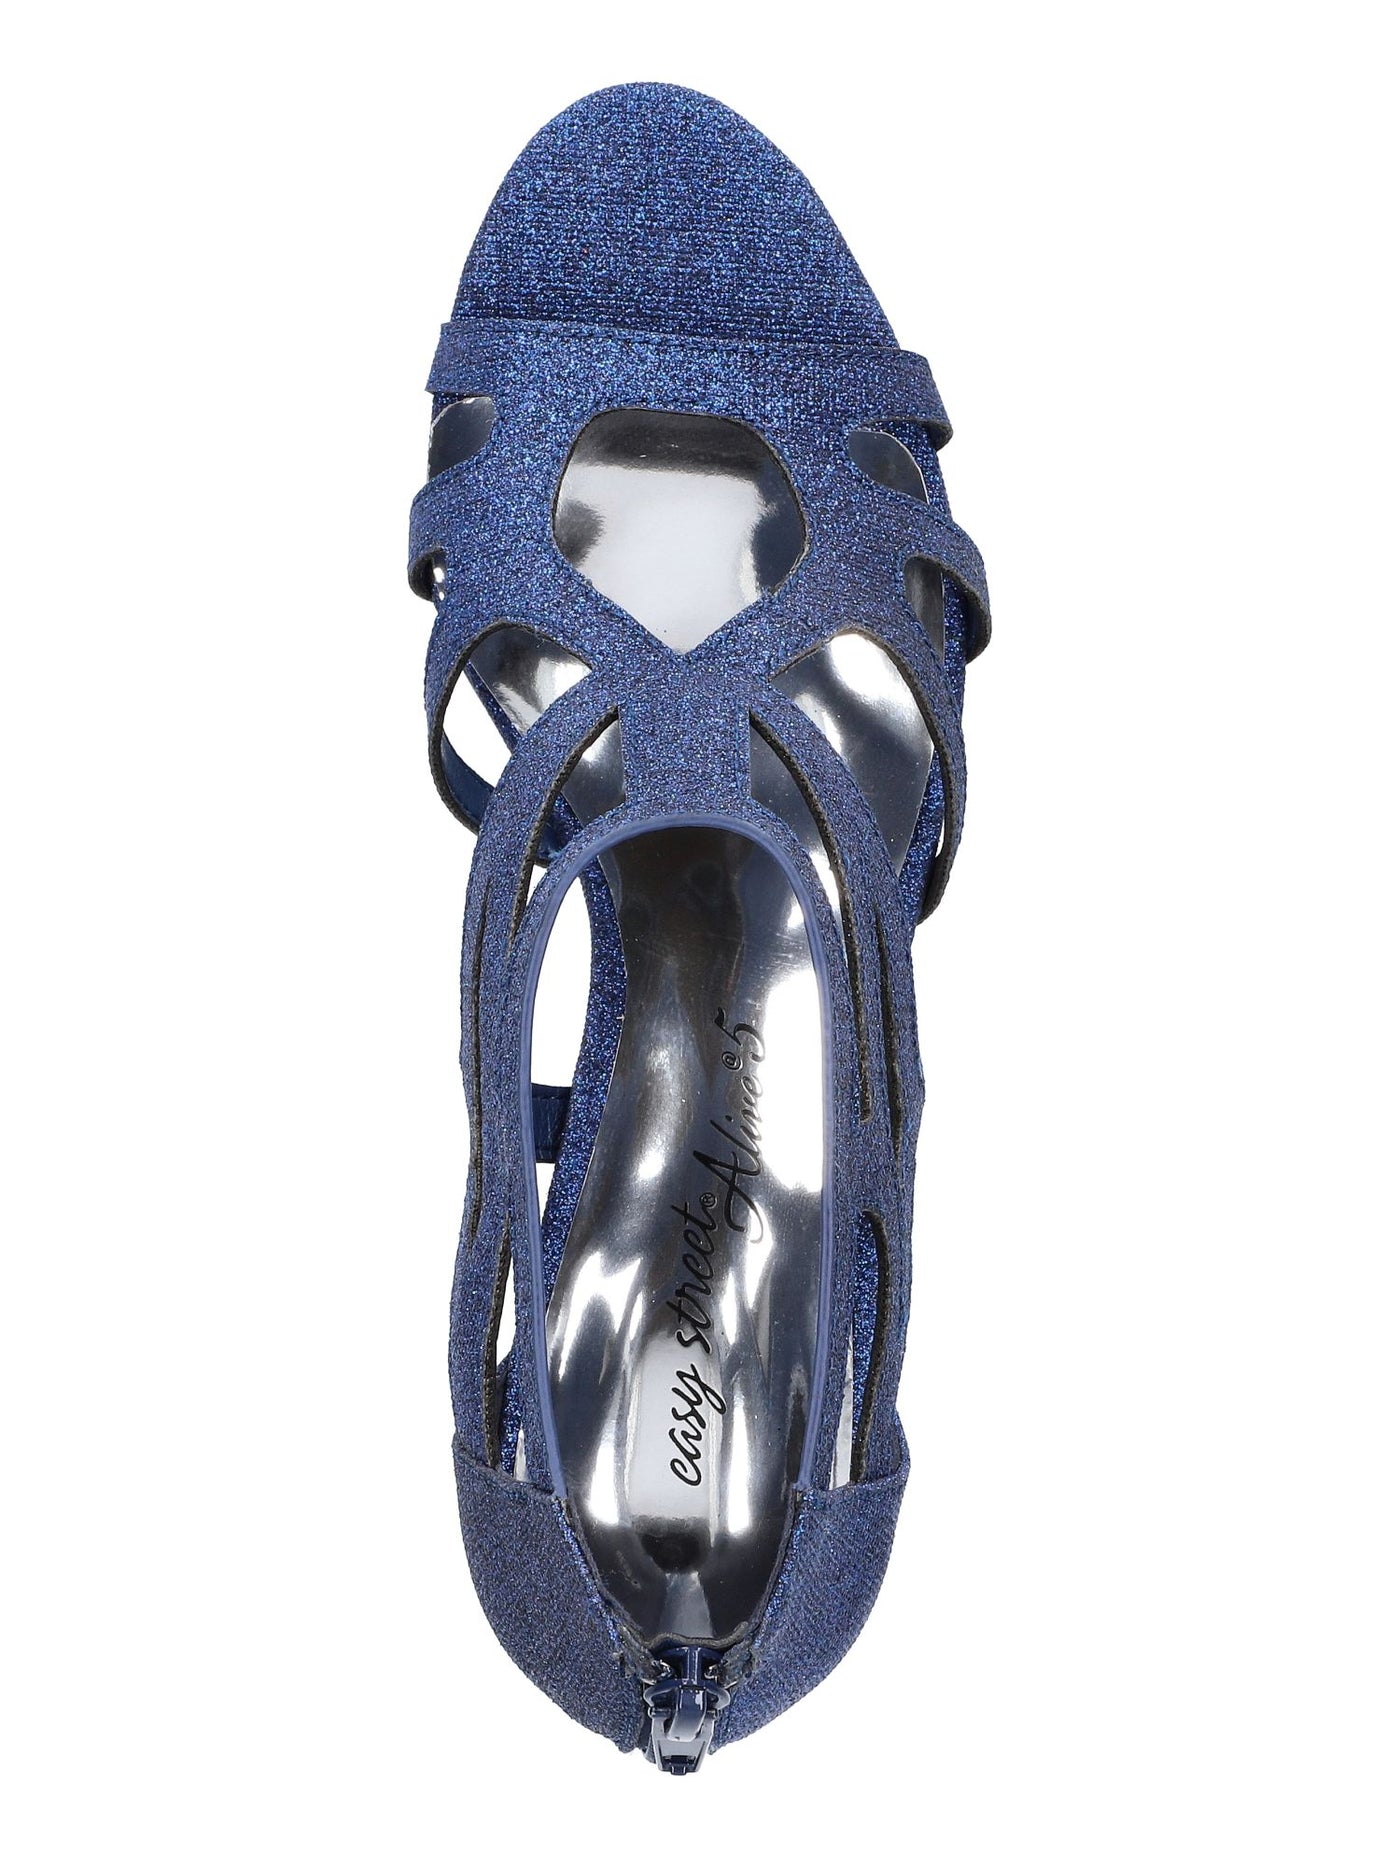 EASY STREET ALIVE AT 5 Womens Blue Strappy Flattery Peep Toe Kitten Heel Zip-Up Dress Sandals Shoes 9.5 N